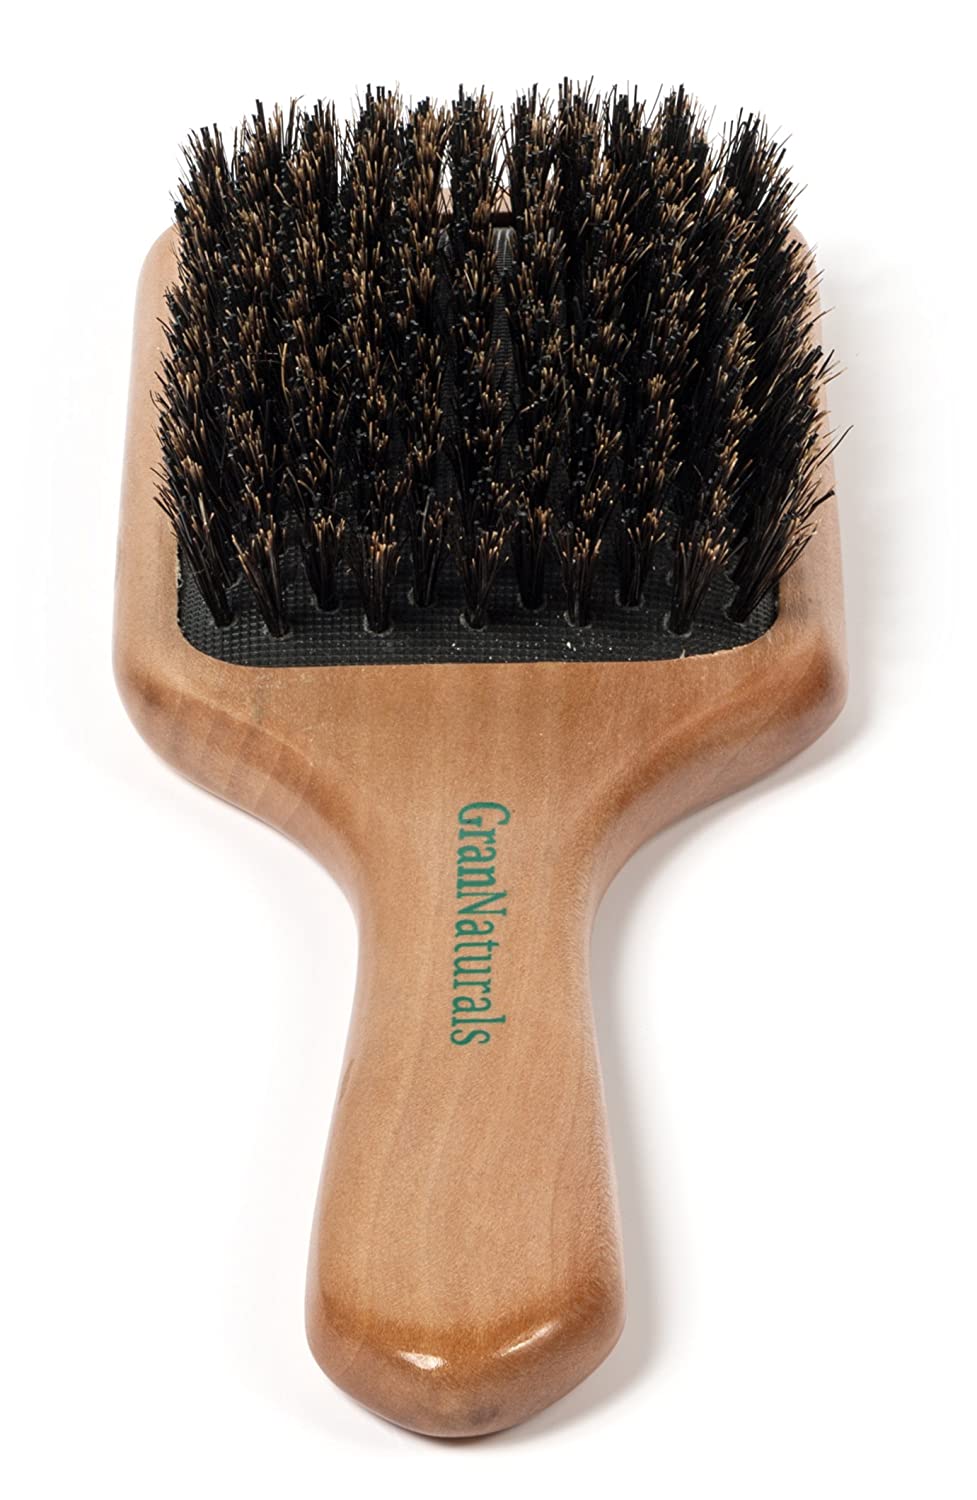 GranNaturals Anti-Frizz Boar Bristle Paddle Hair Brush